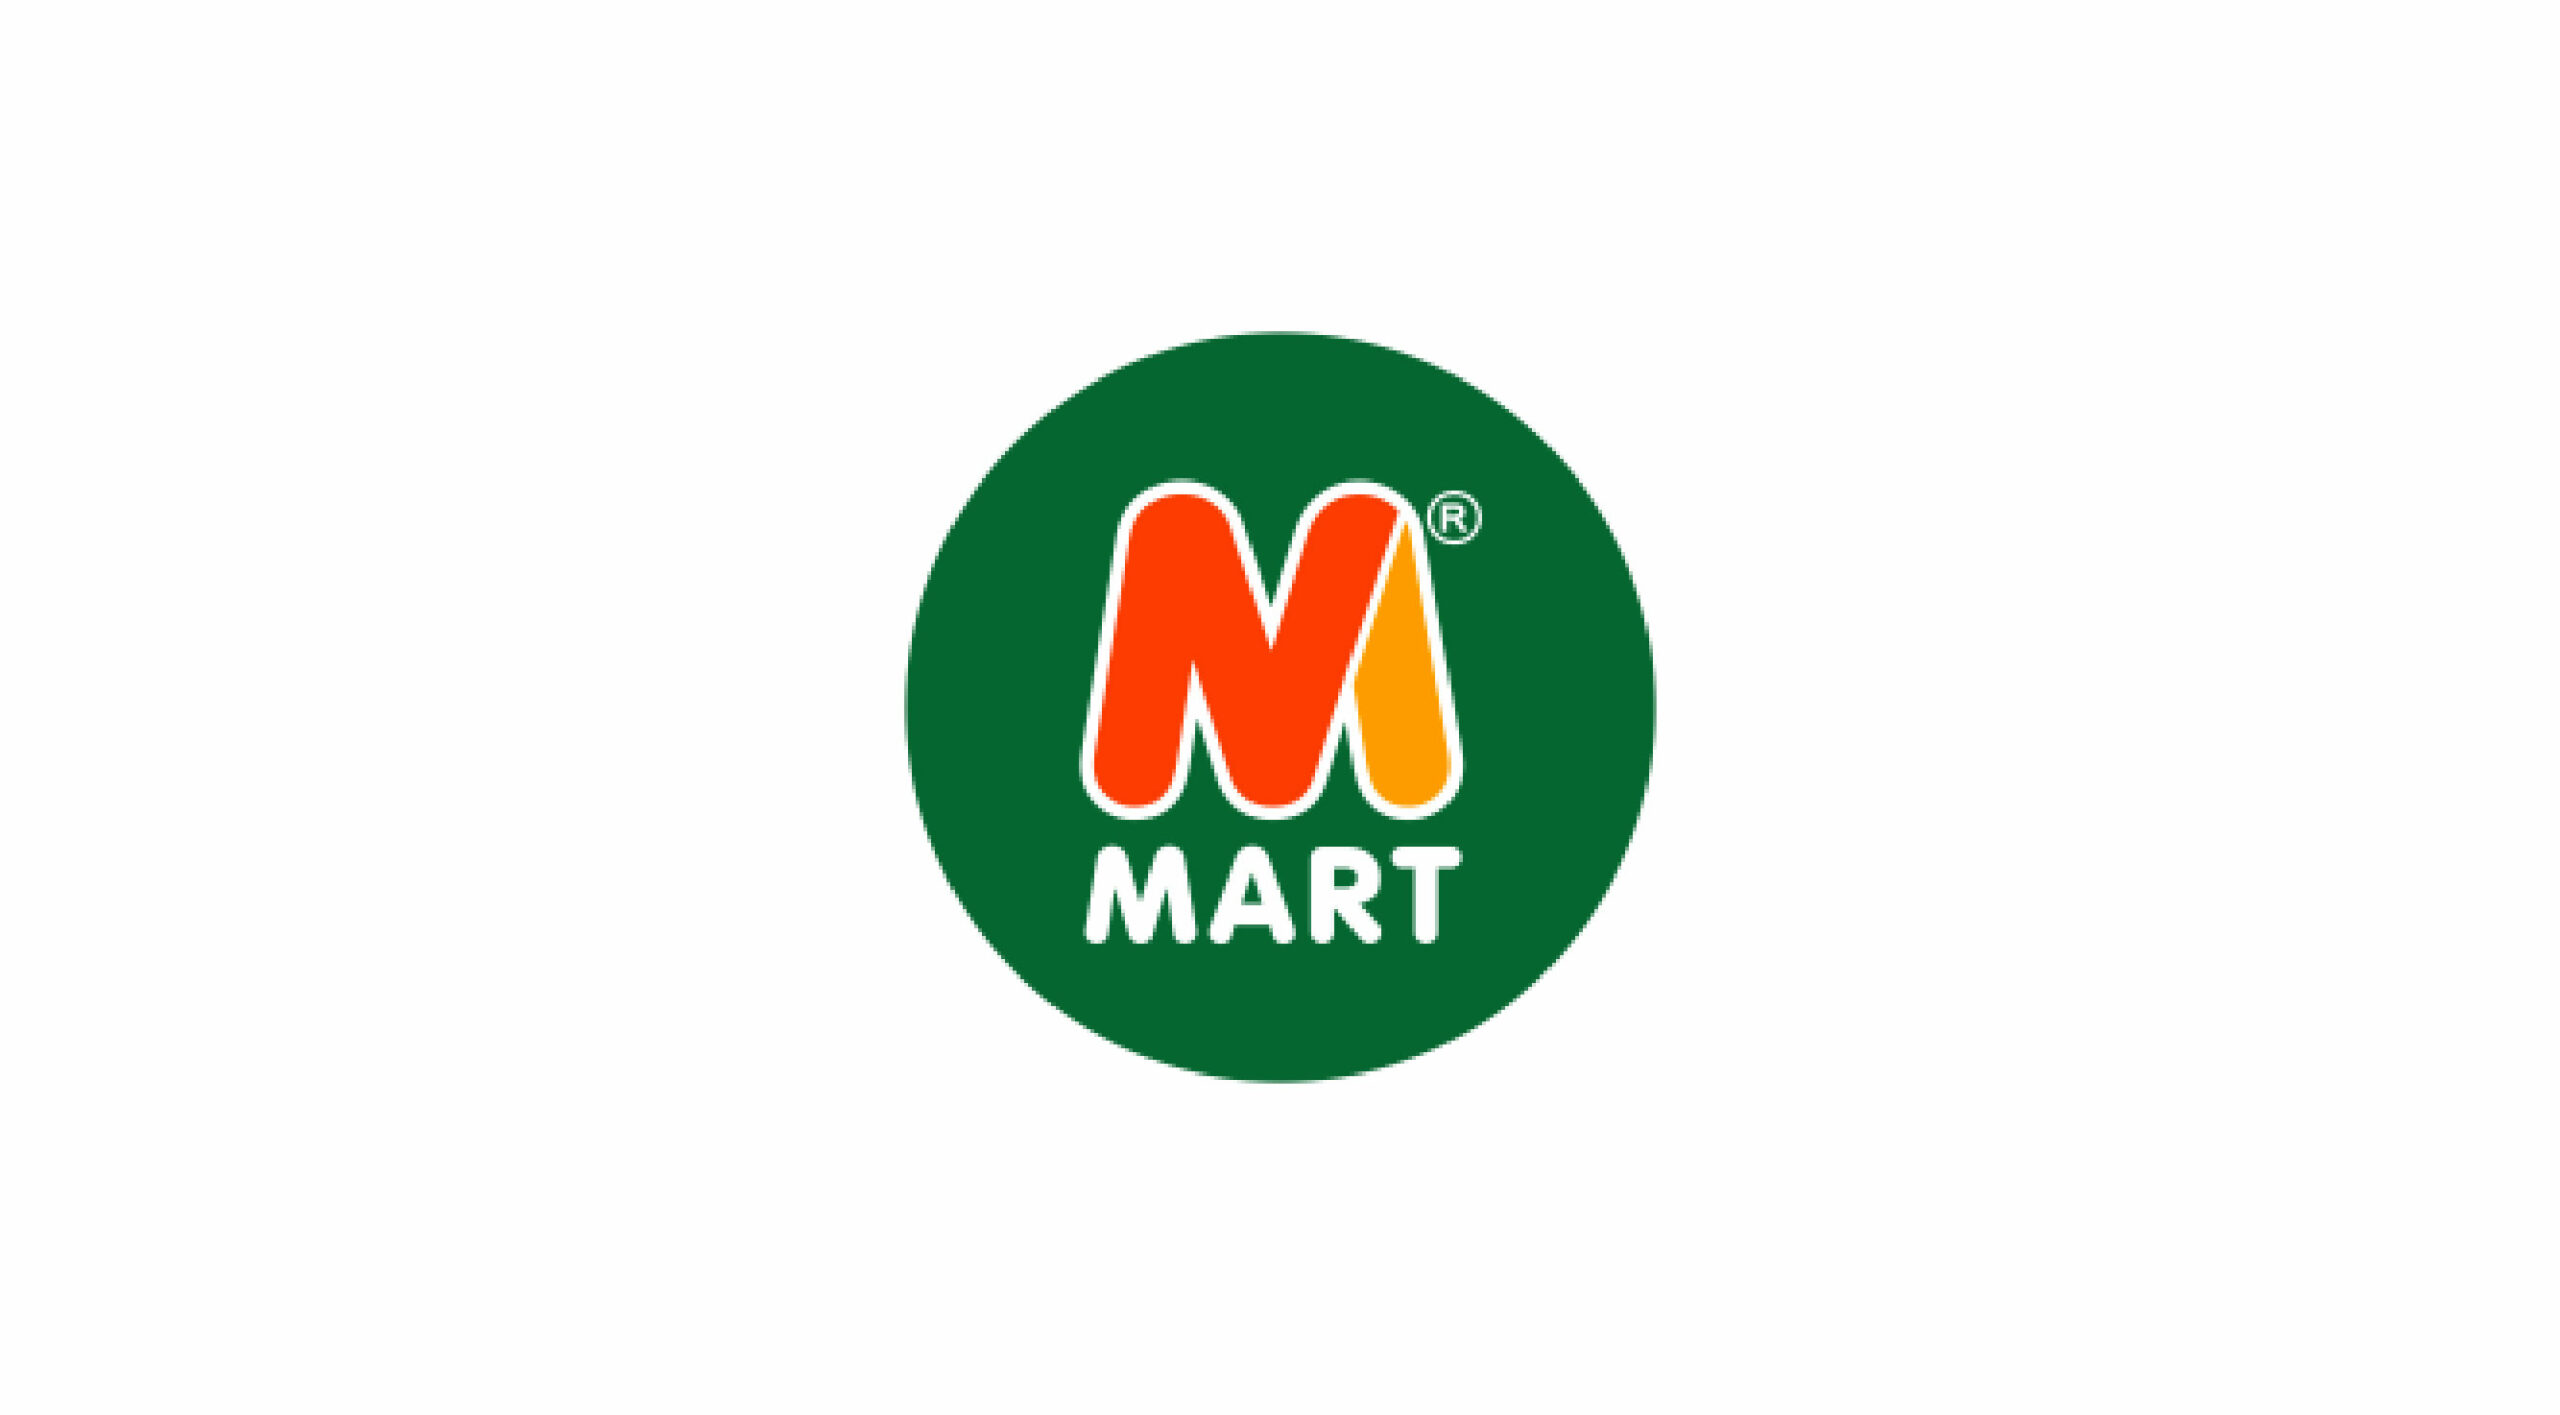 Lowongan Kerja PT Global Retailindo Pratama (M Mart)